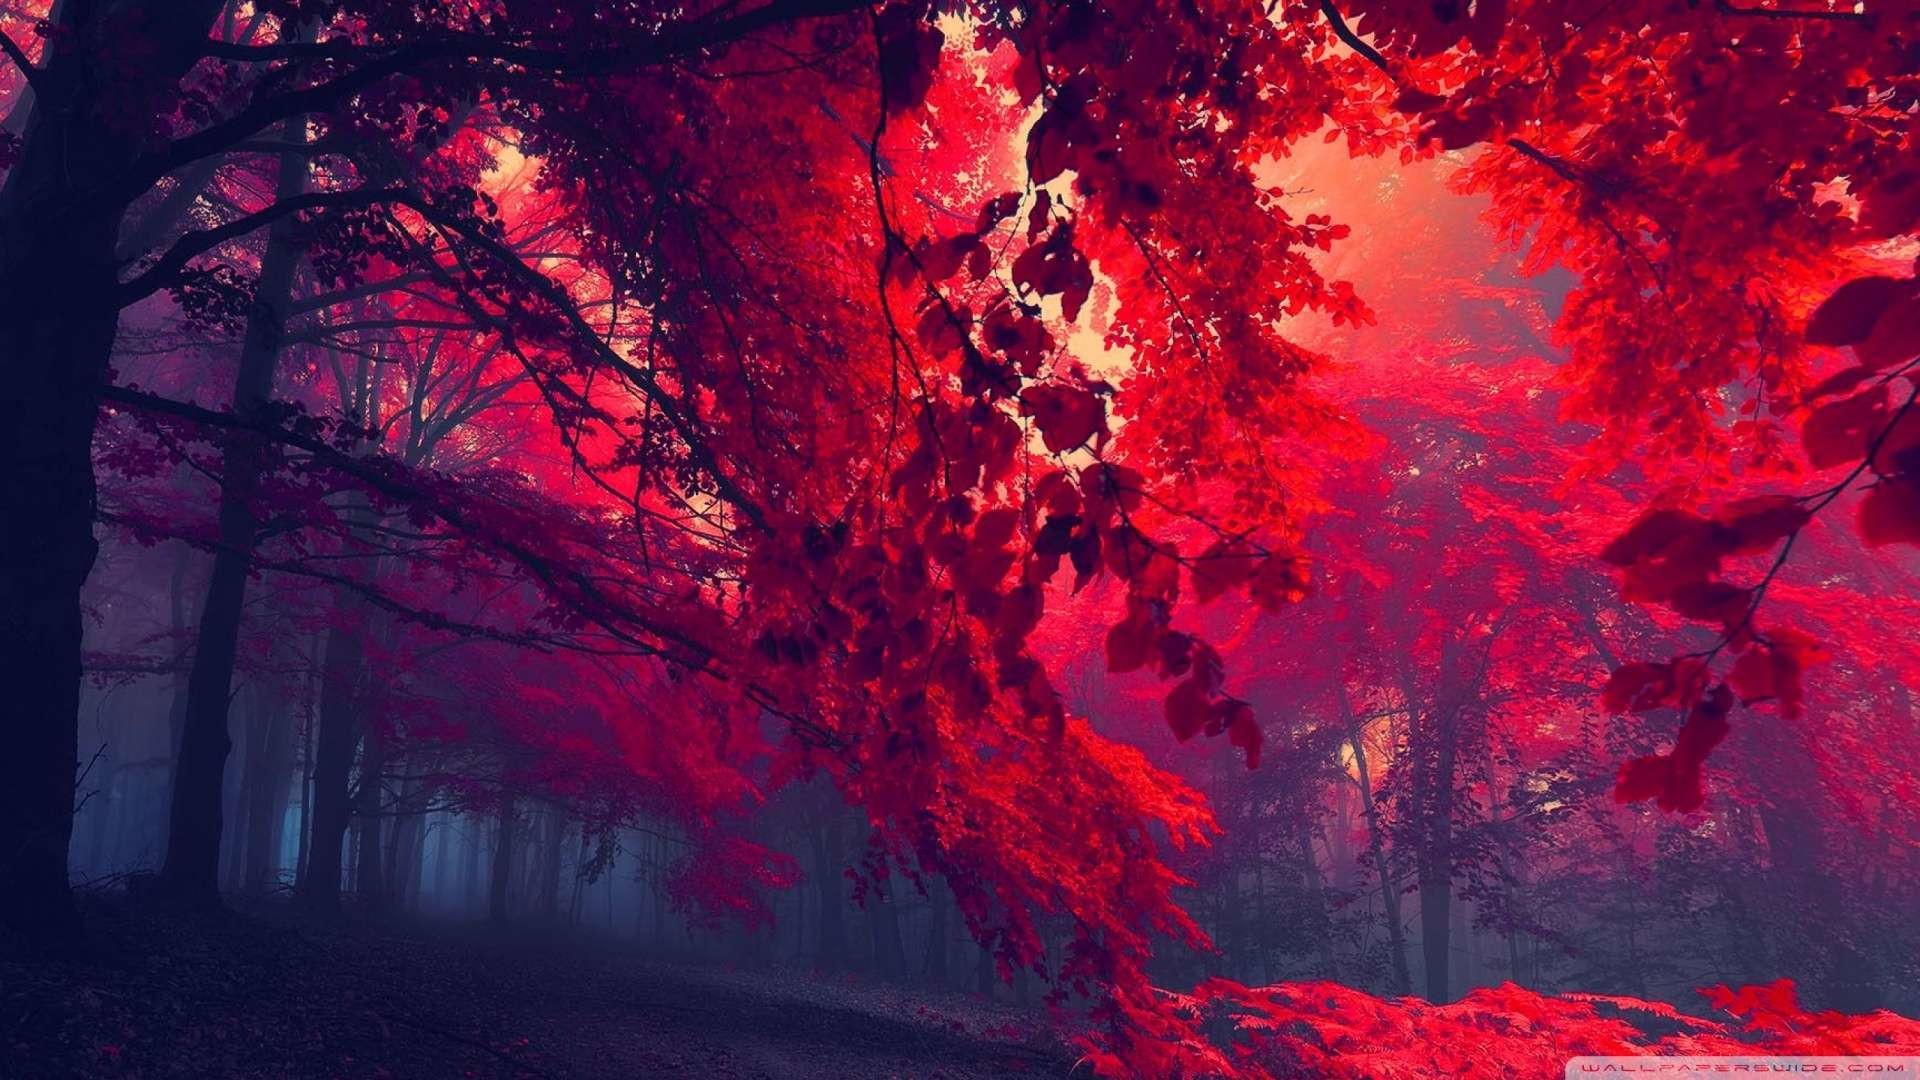 Red HD Wallpaper 1080p Image